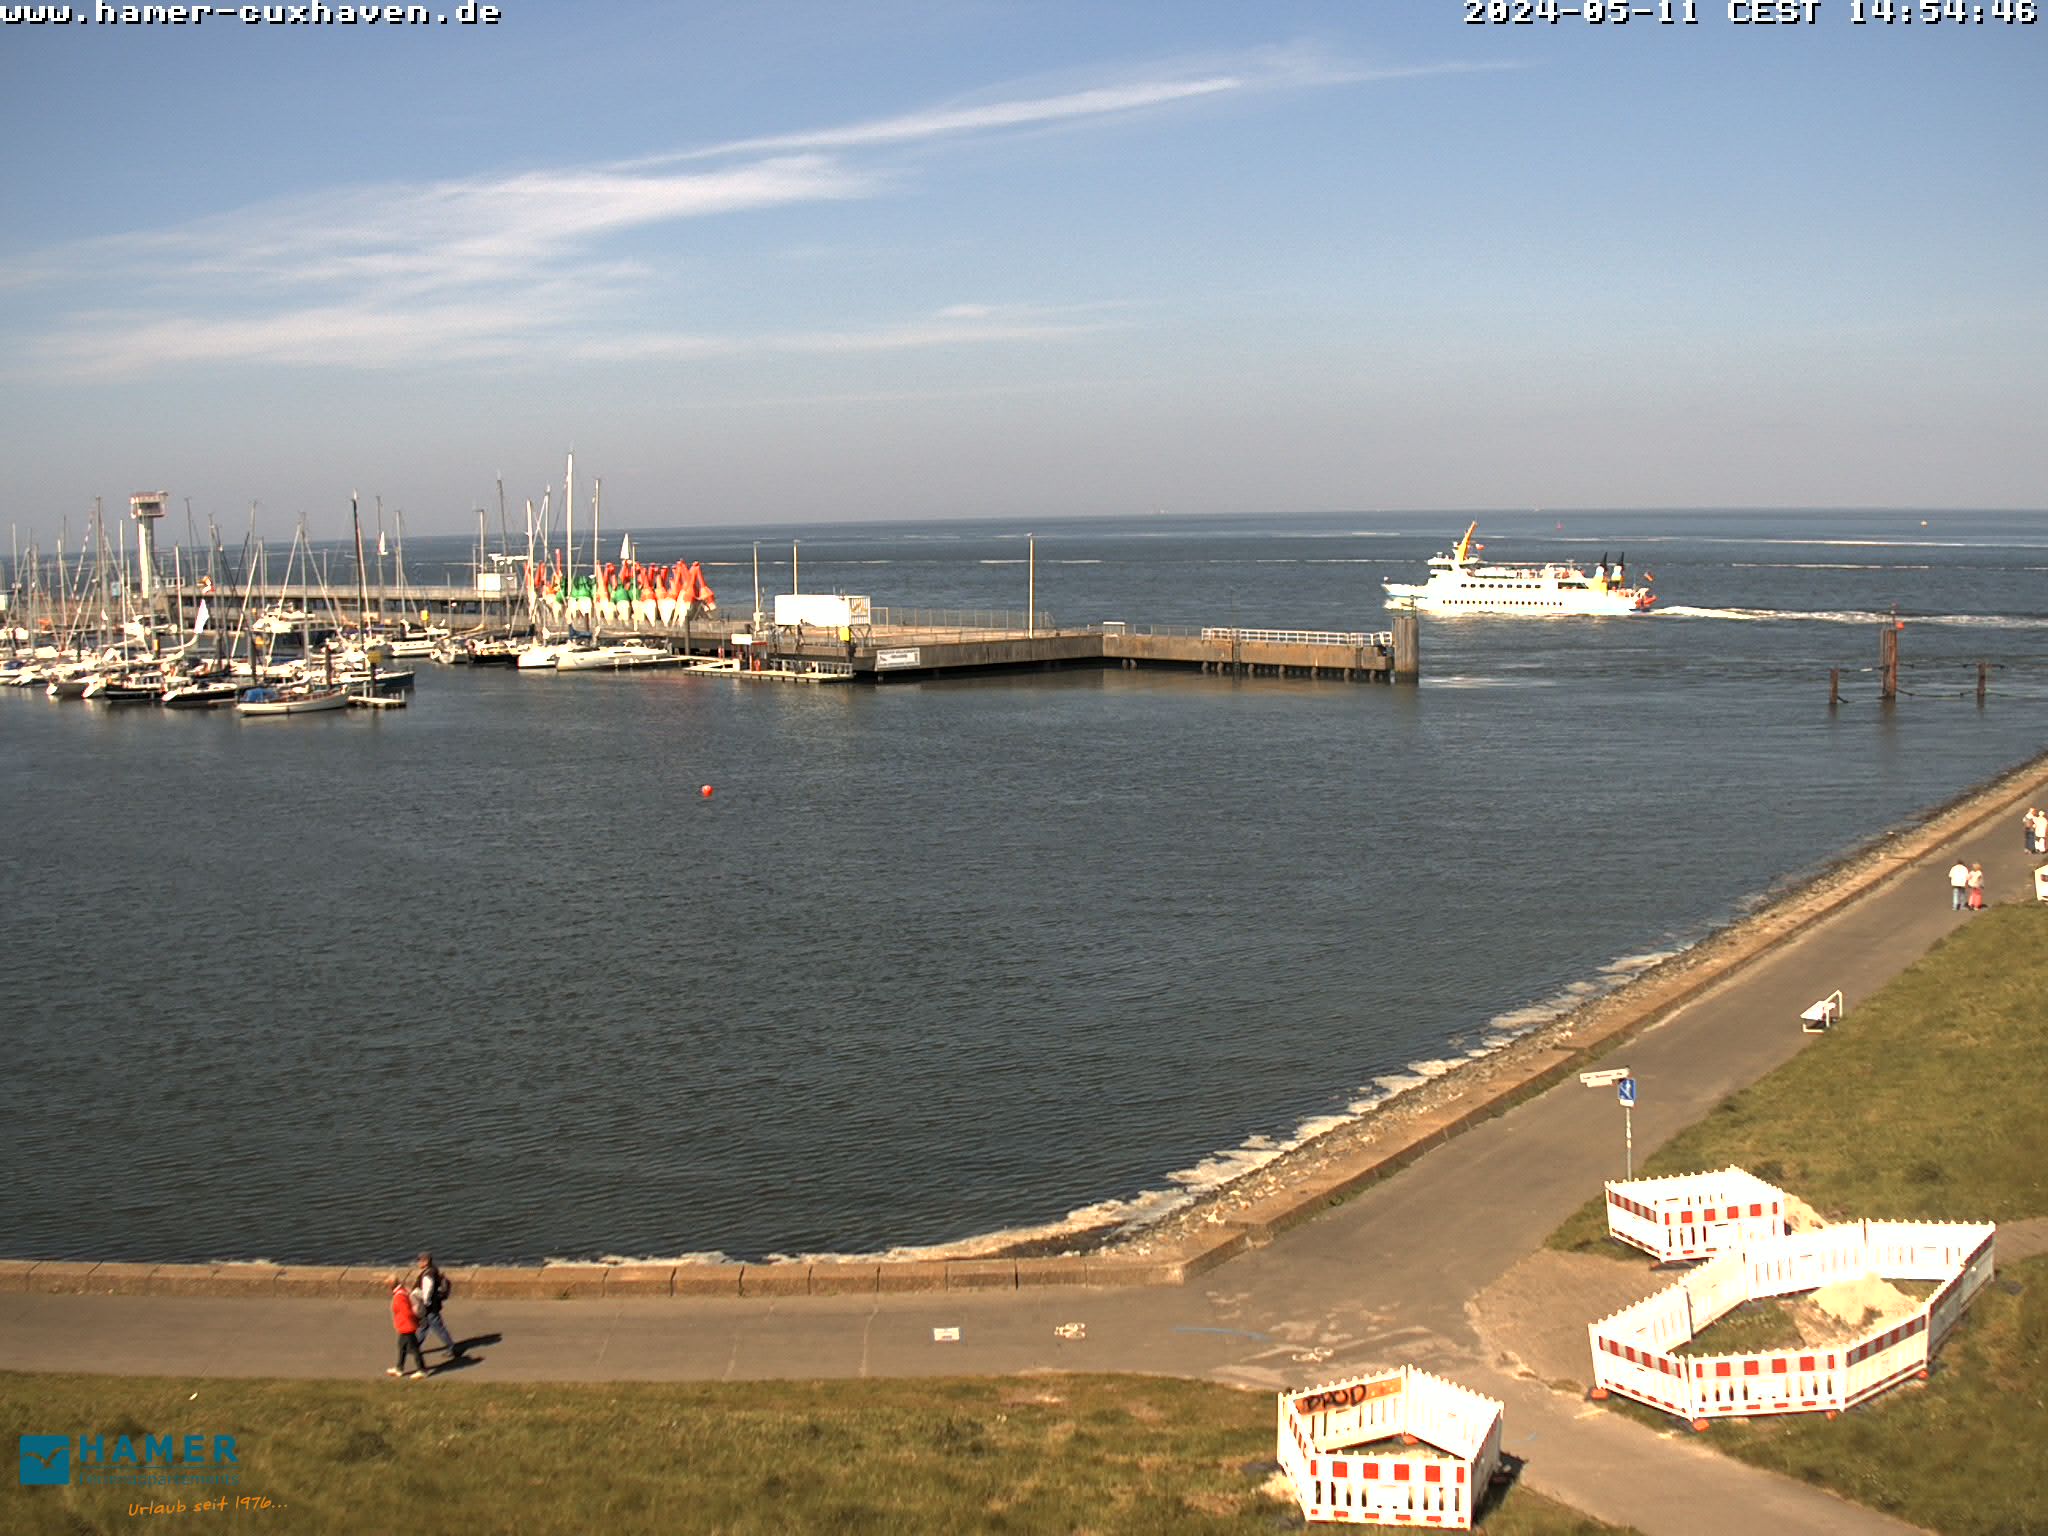 Cuxhaven Mer. 14:55